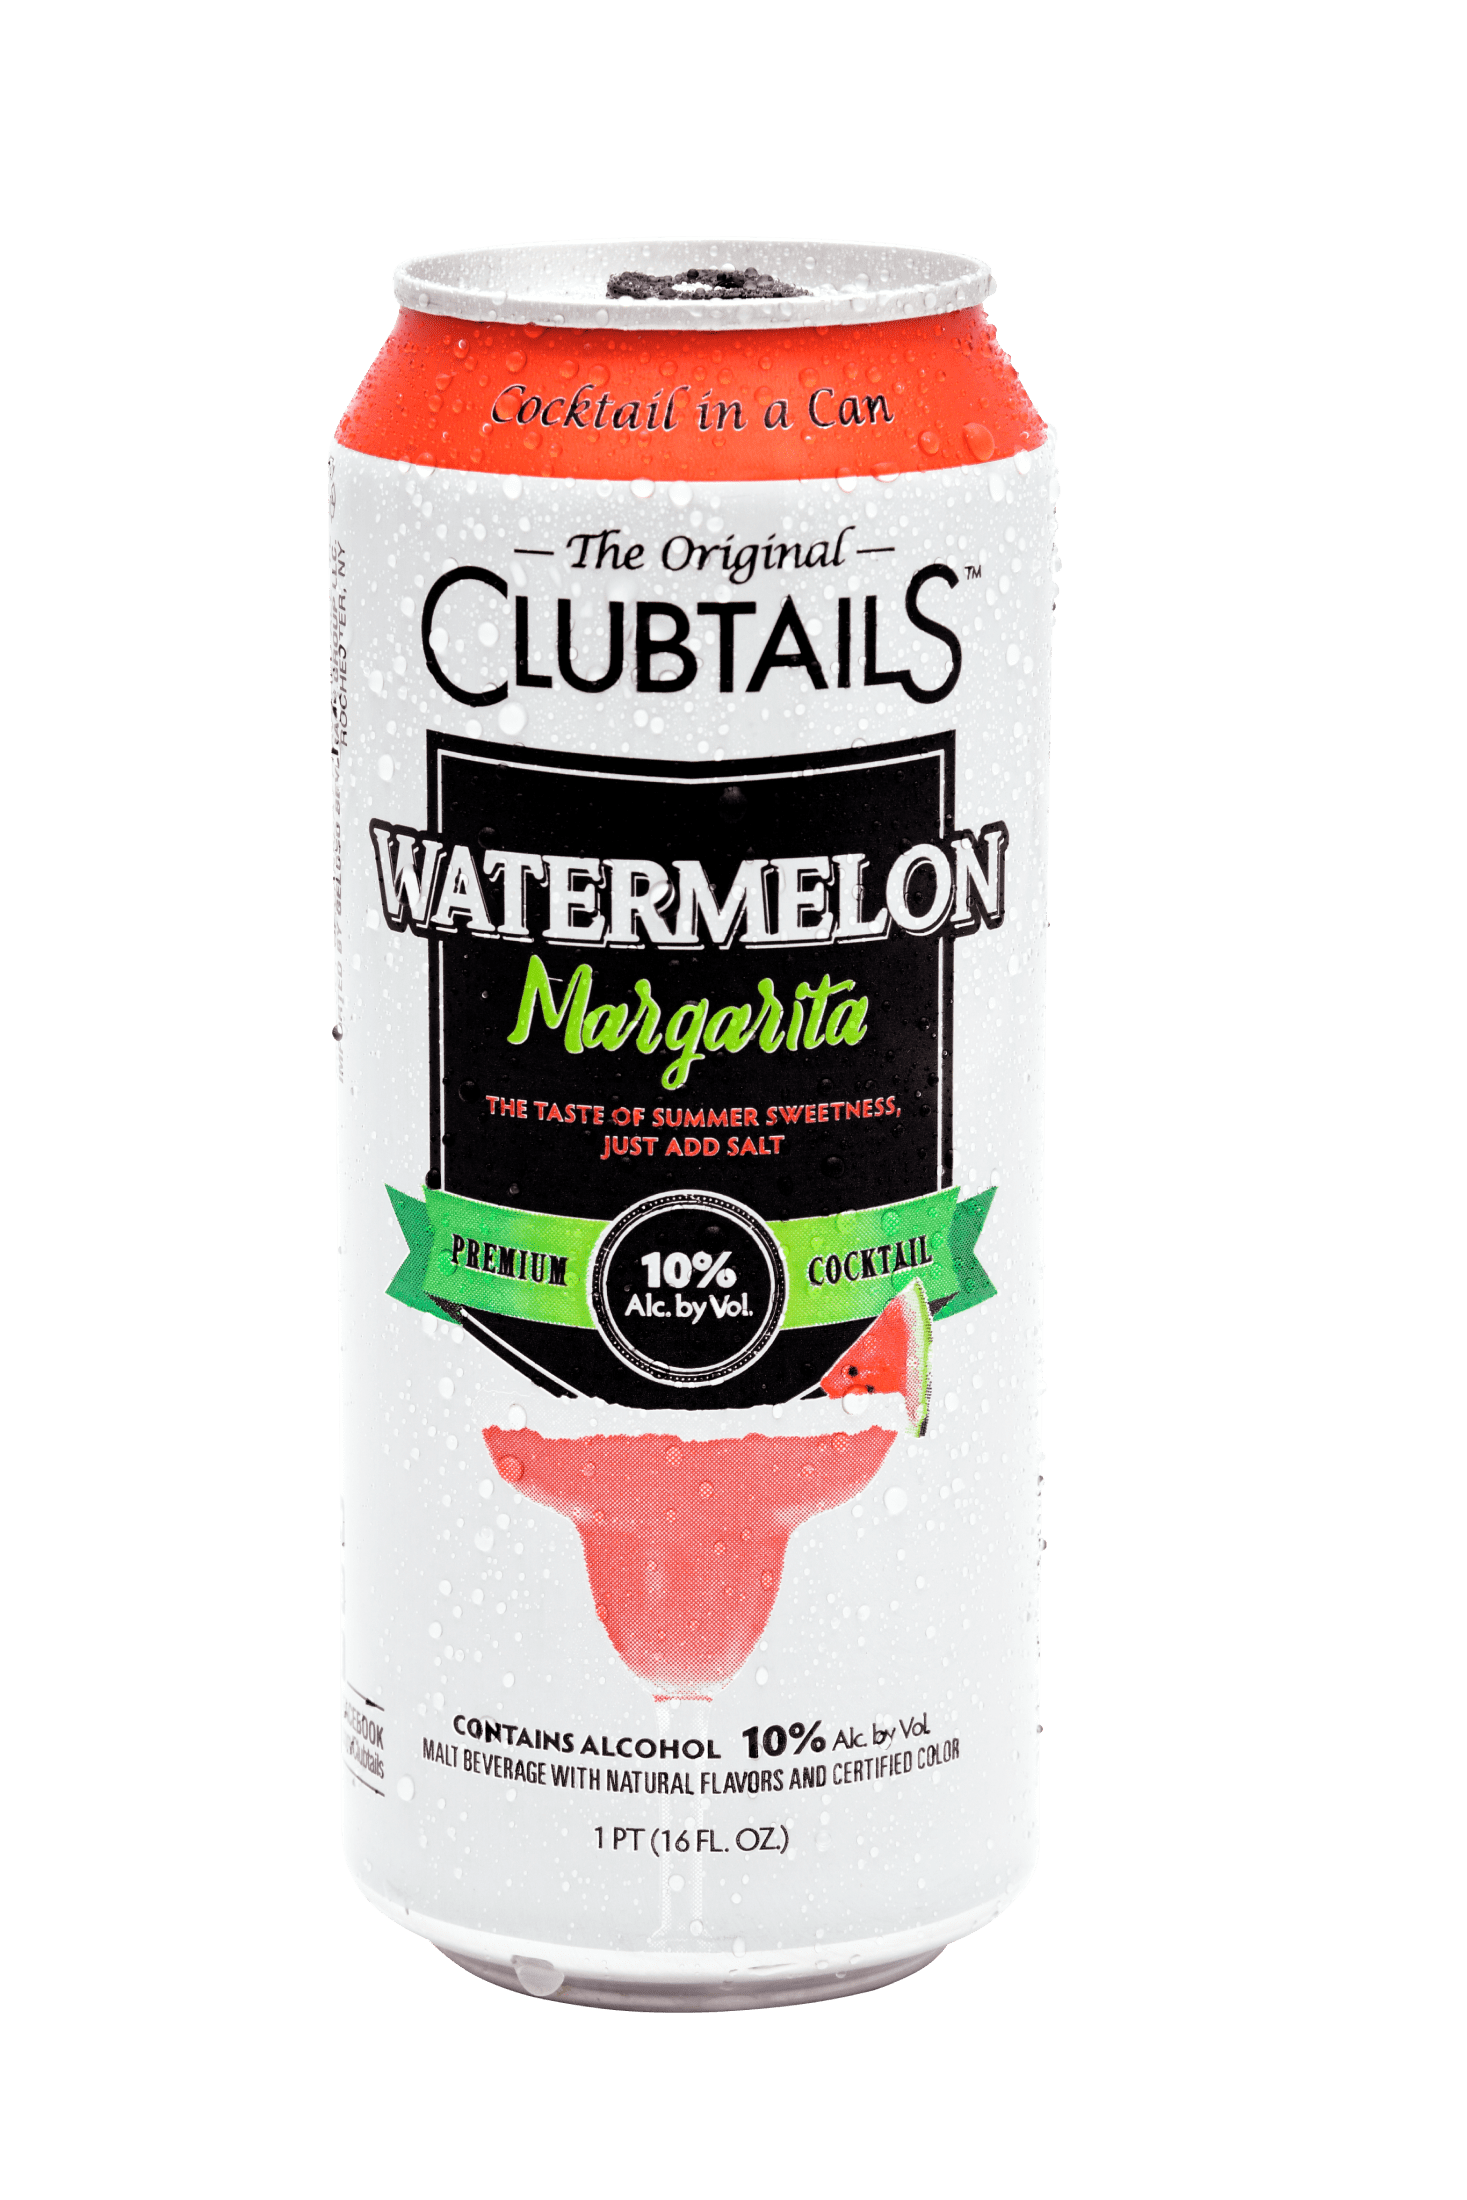 Watermelon Margarita| Clubtails Cocktail in a Can